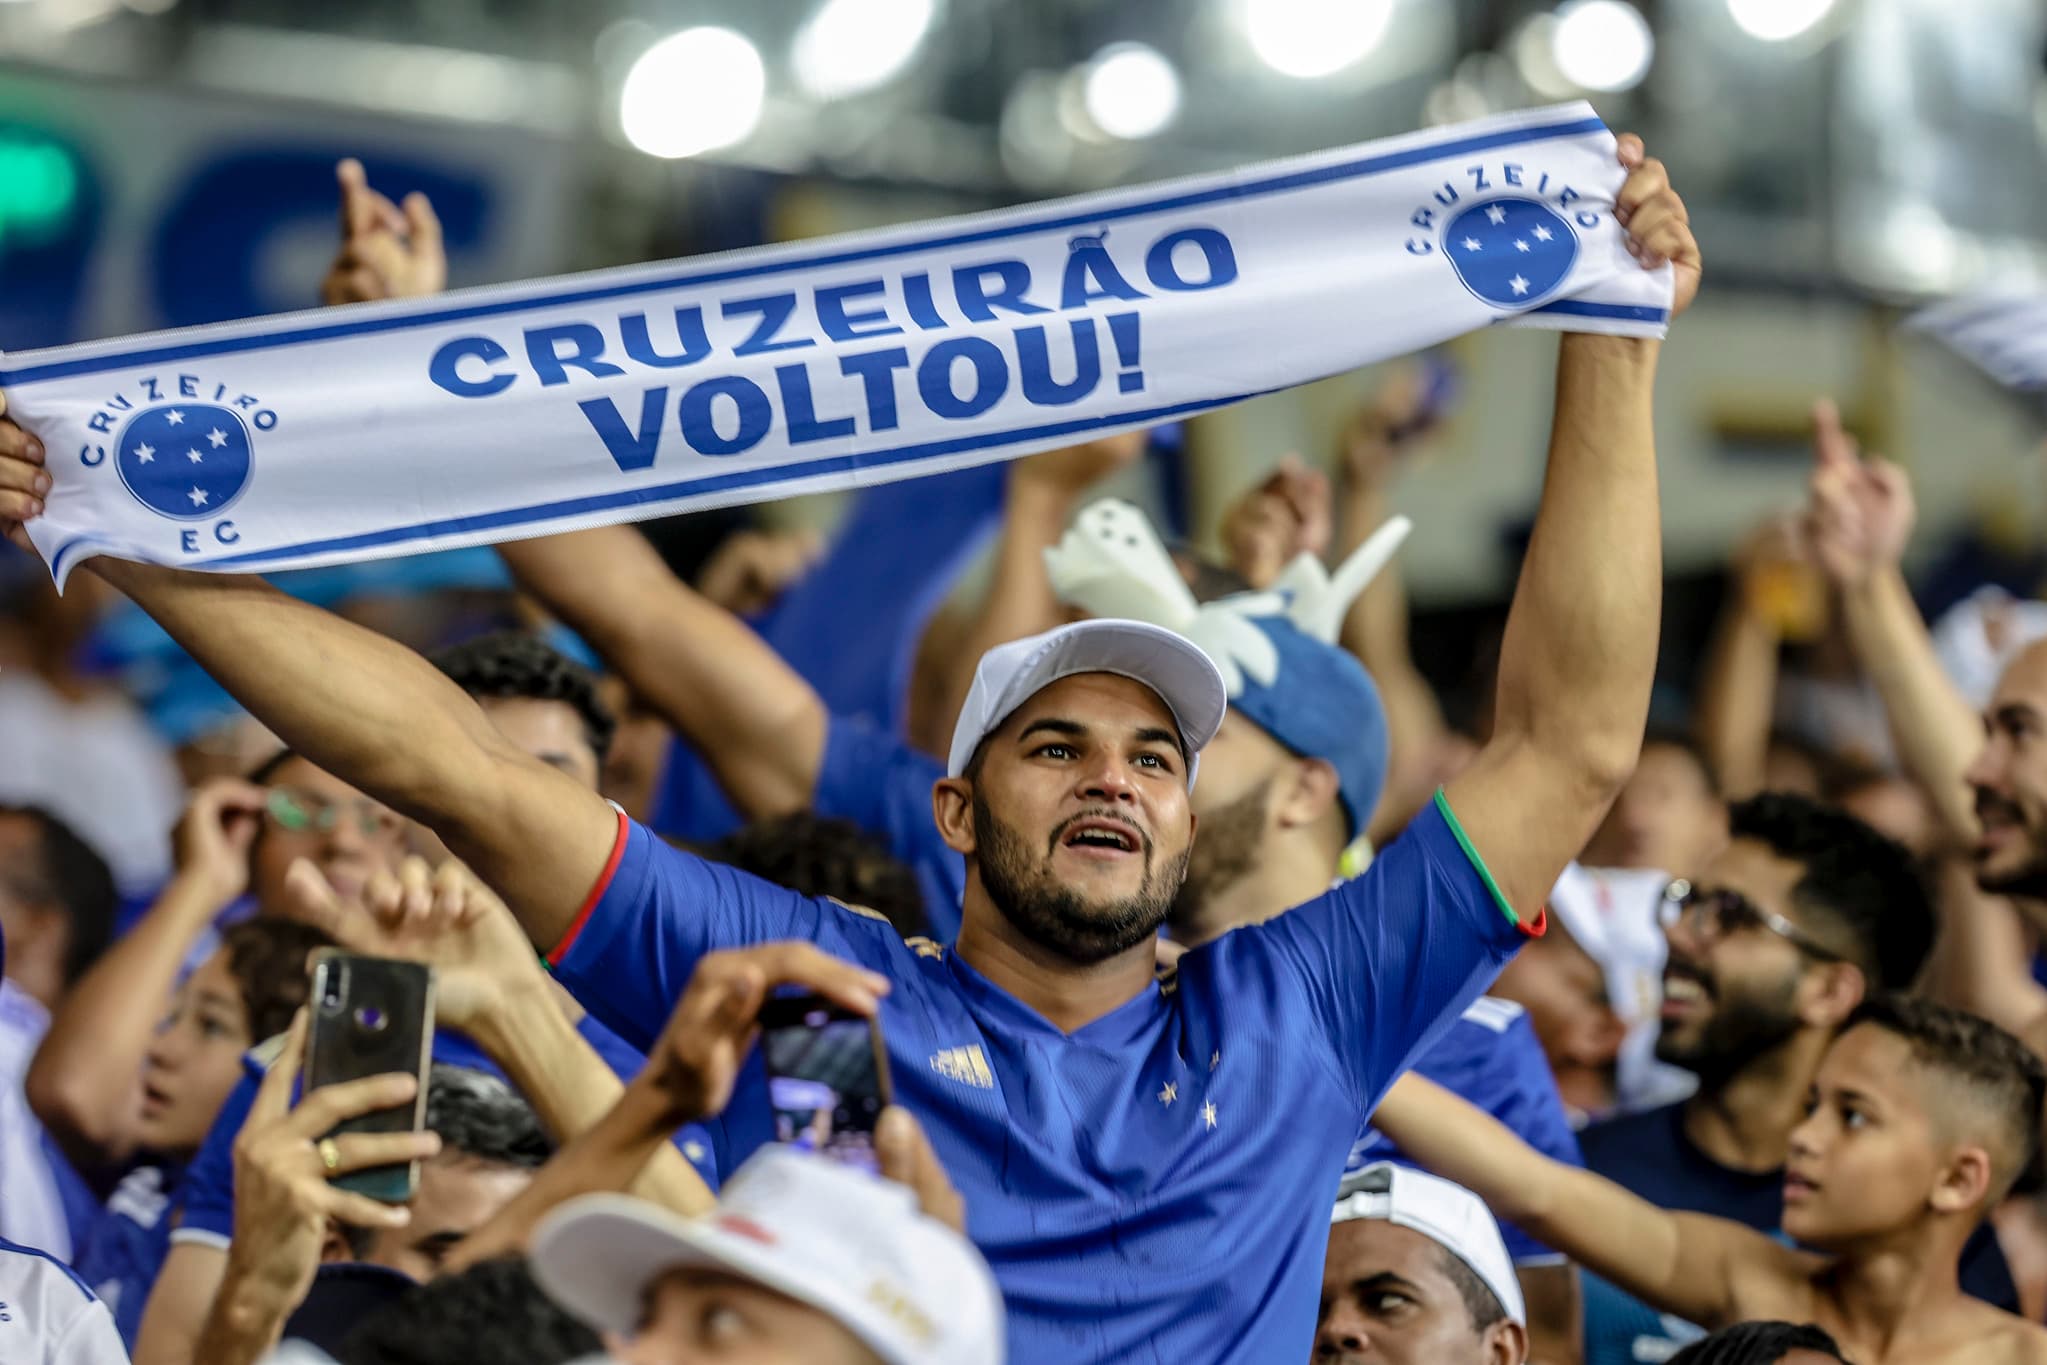 Torcida Cruzeiro